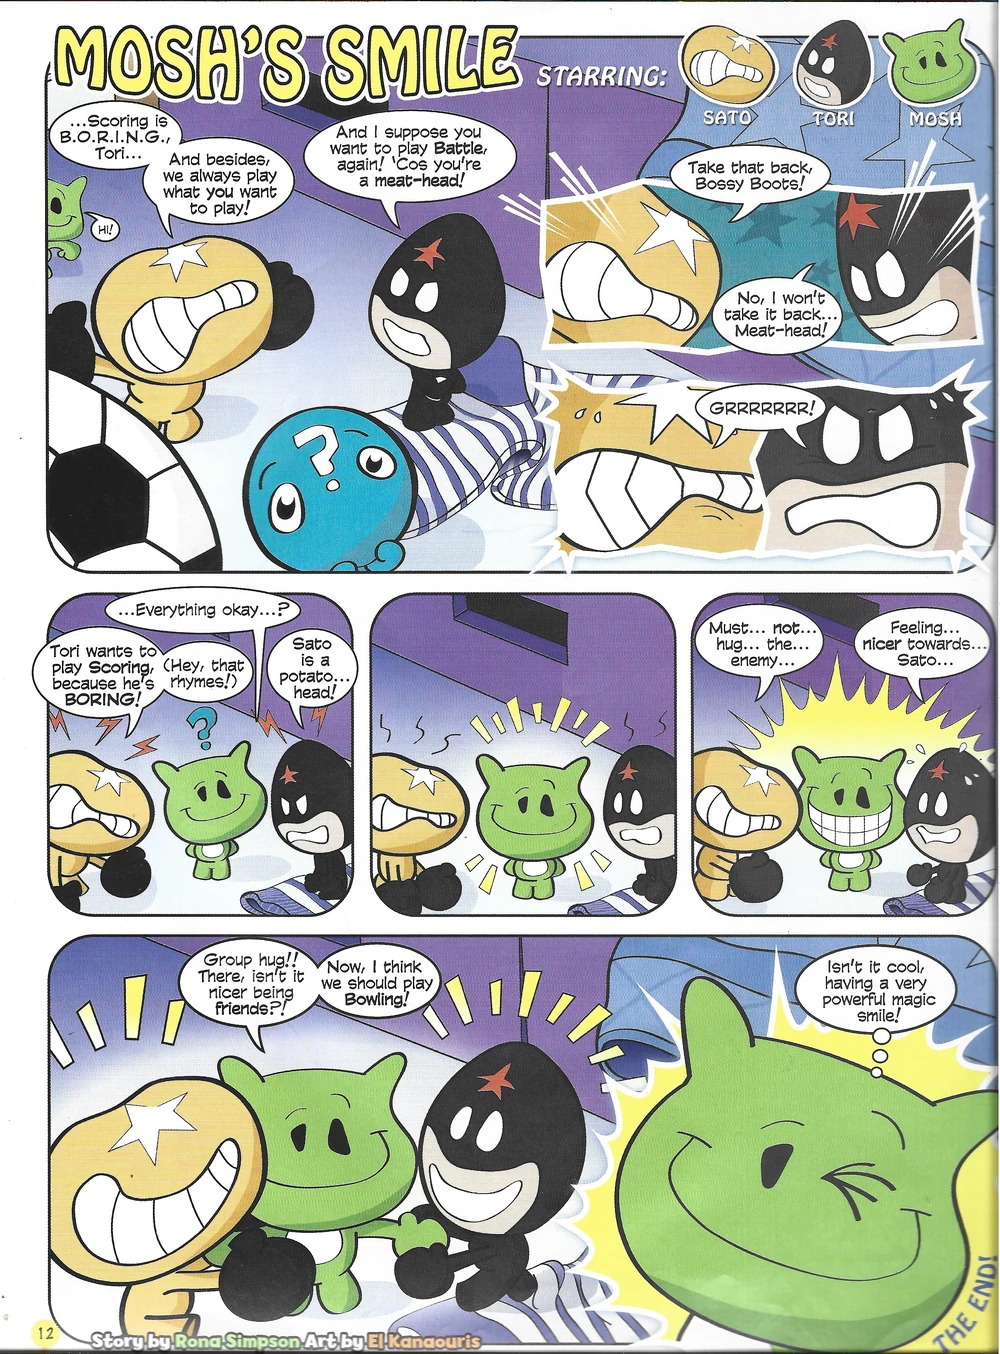 Gogo's Crazy Bones Comic Issue 1, page 12 (September 2010)